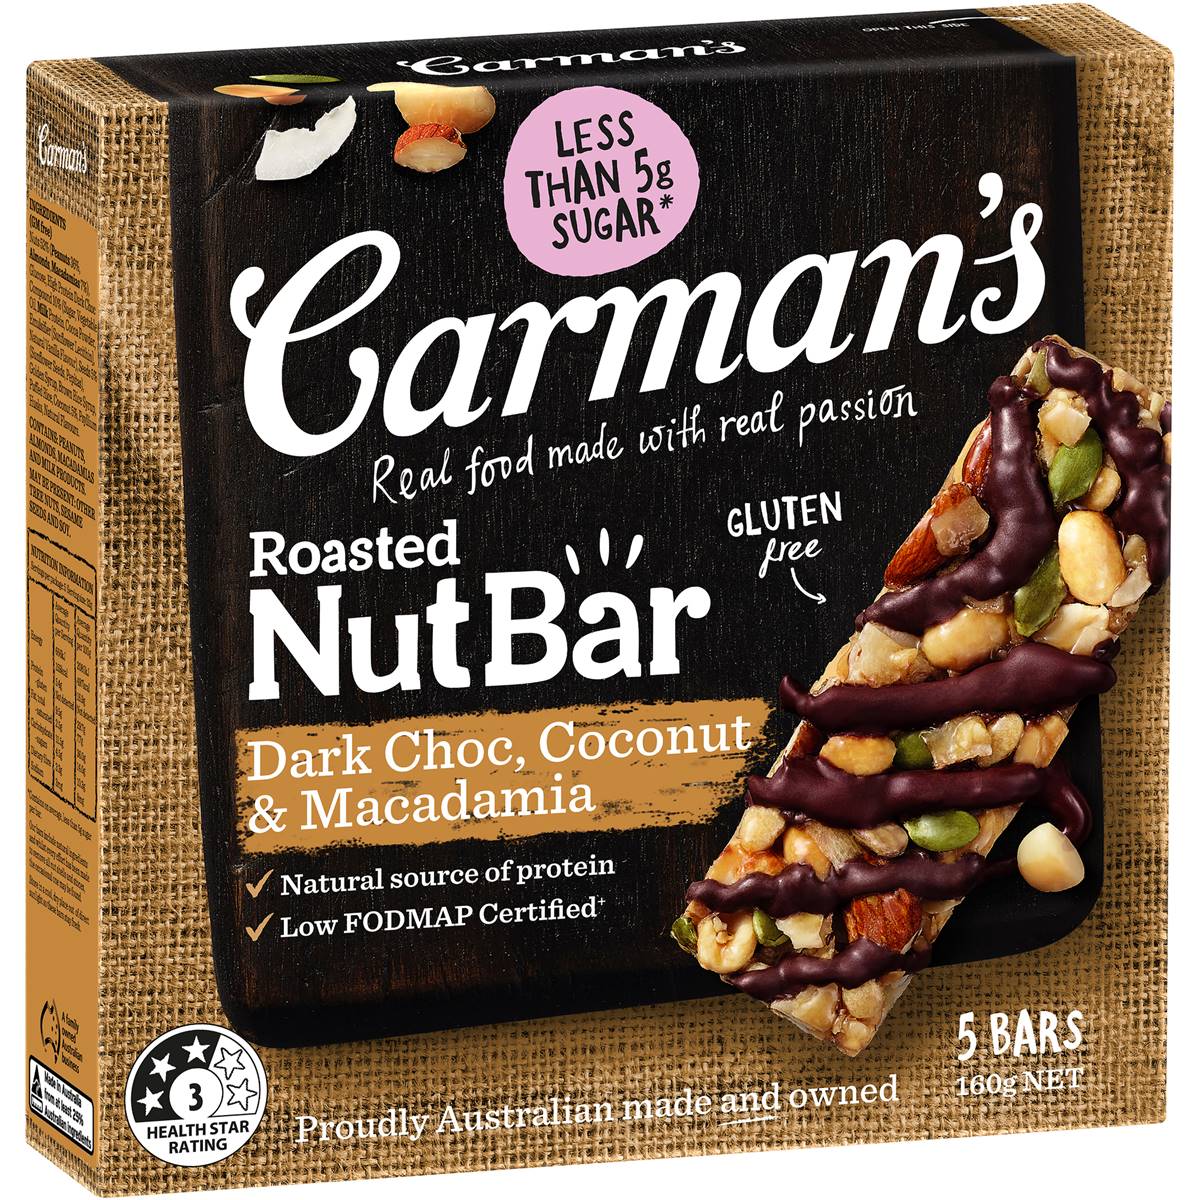 Calories in Carman's Dark Choc Macadamia Coconut Nut Bars